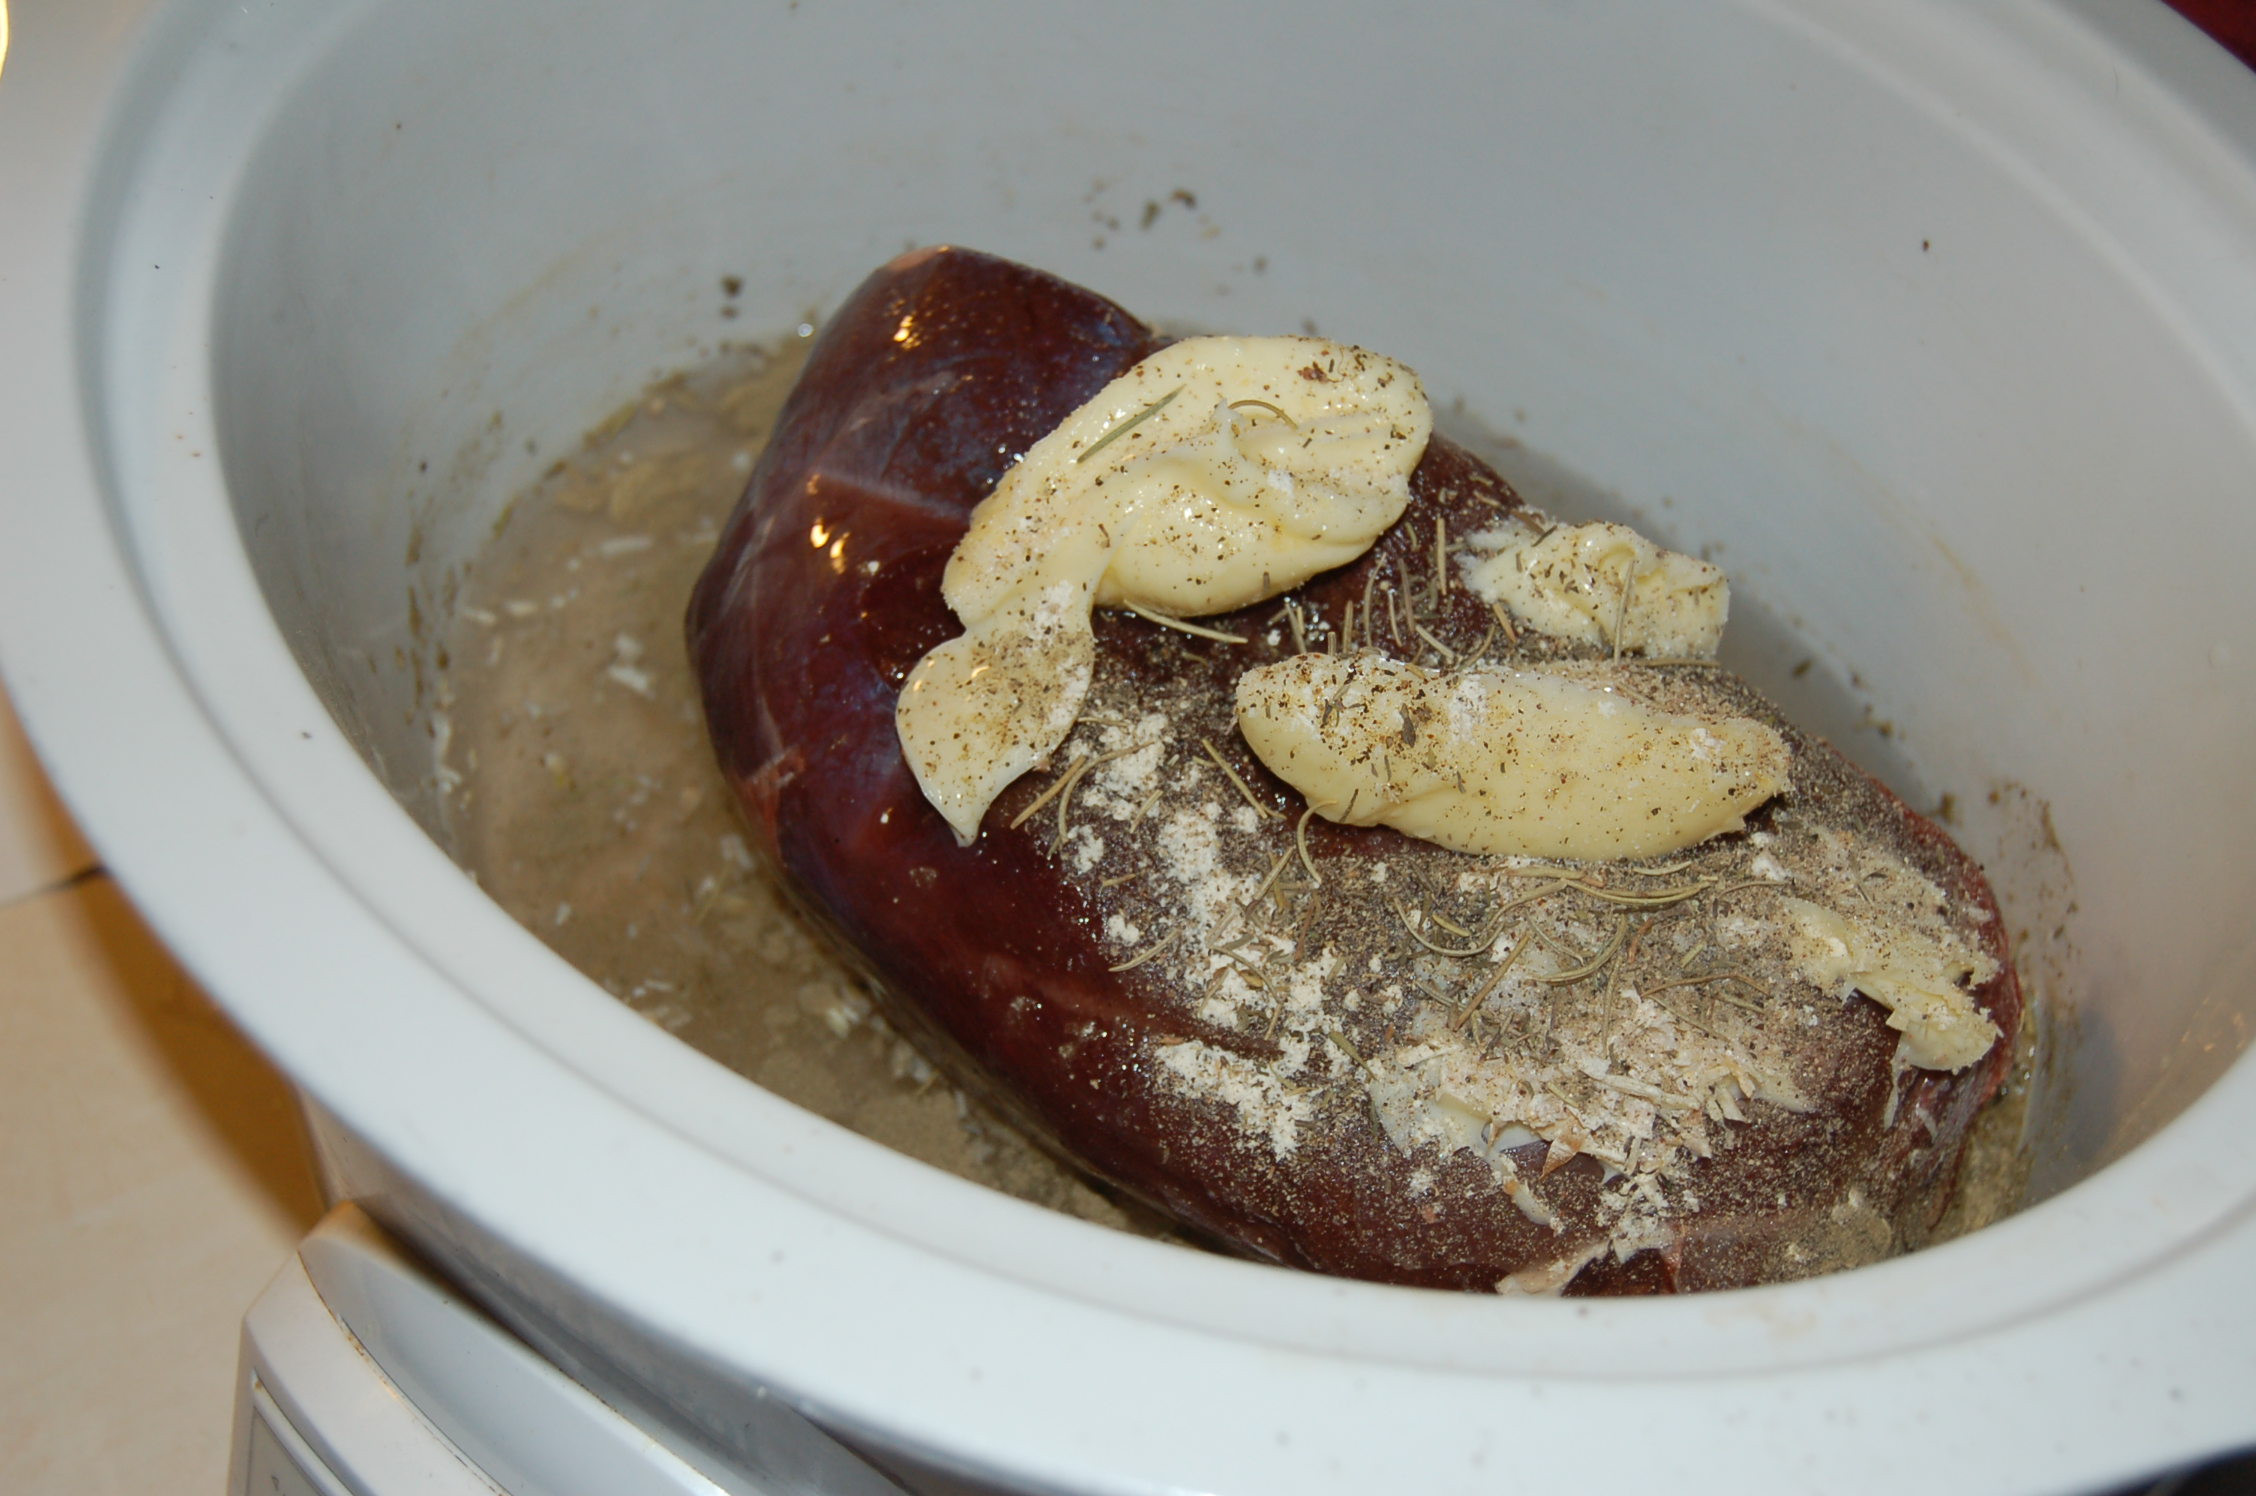 Venison Stew Crock Pot
 Crock Pot Venison Roast Humorous Homemaking